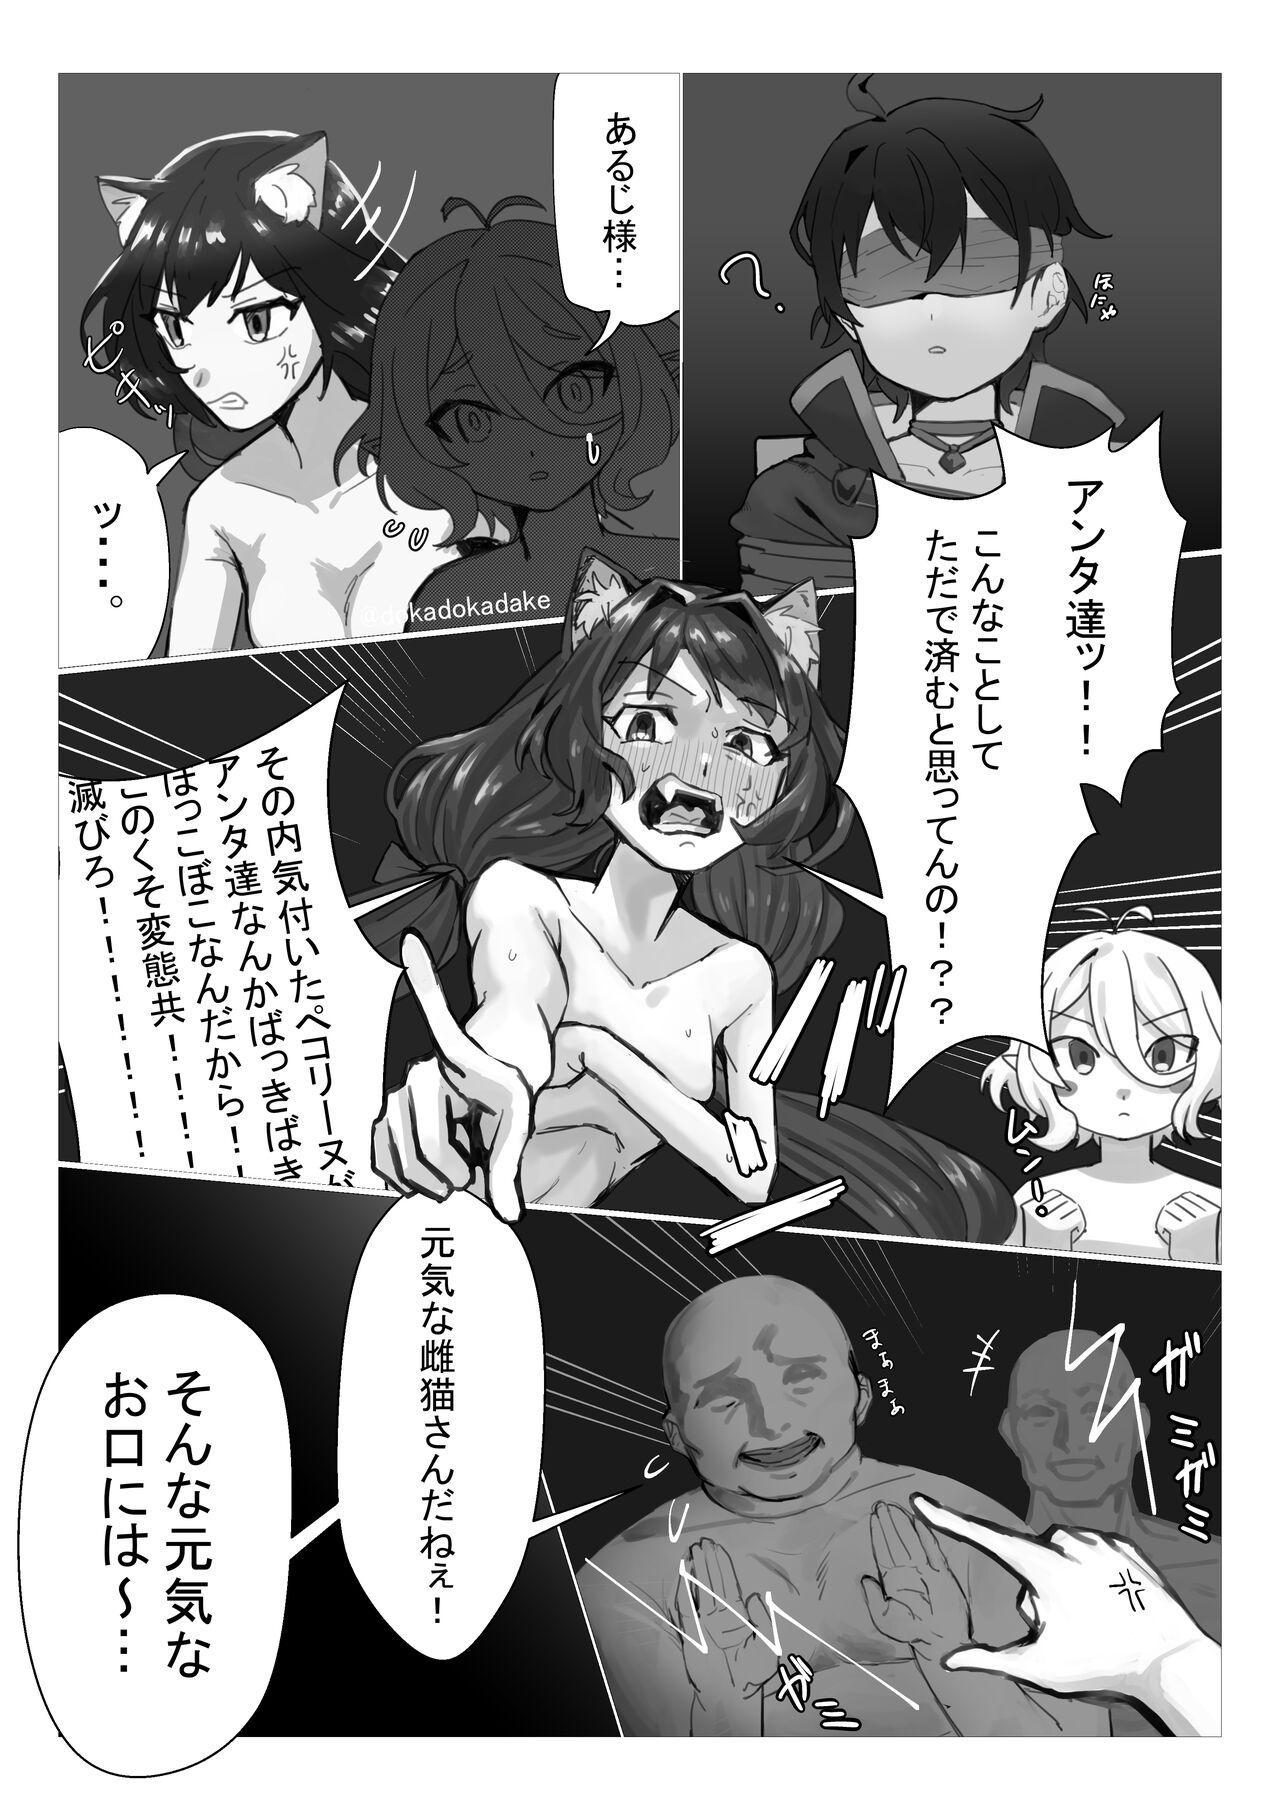 Work プリコネ輪姦NTR漫画 - Princess connect Chudai - Page 2